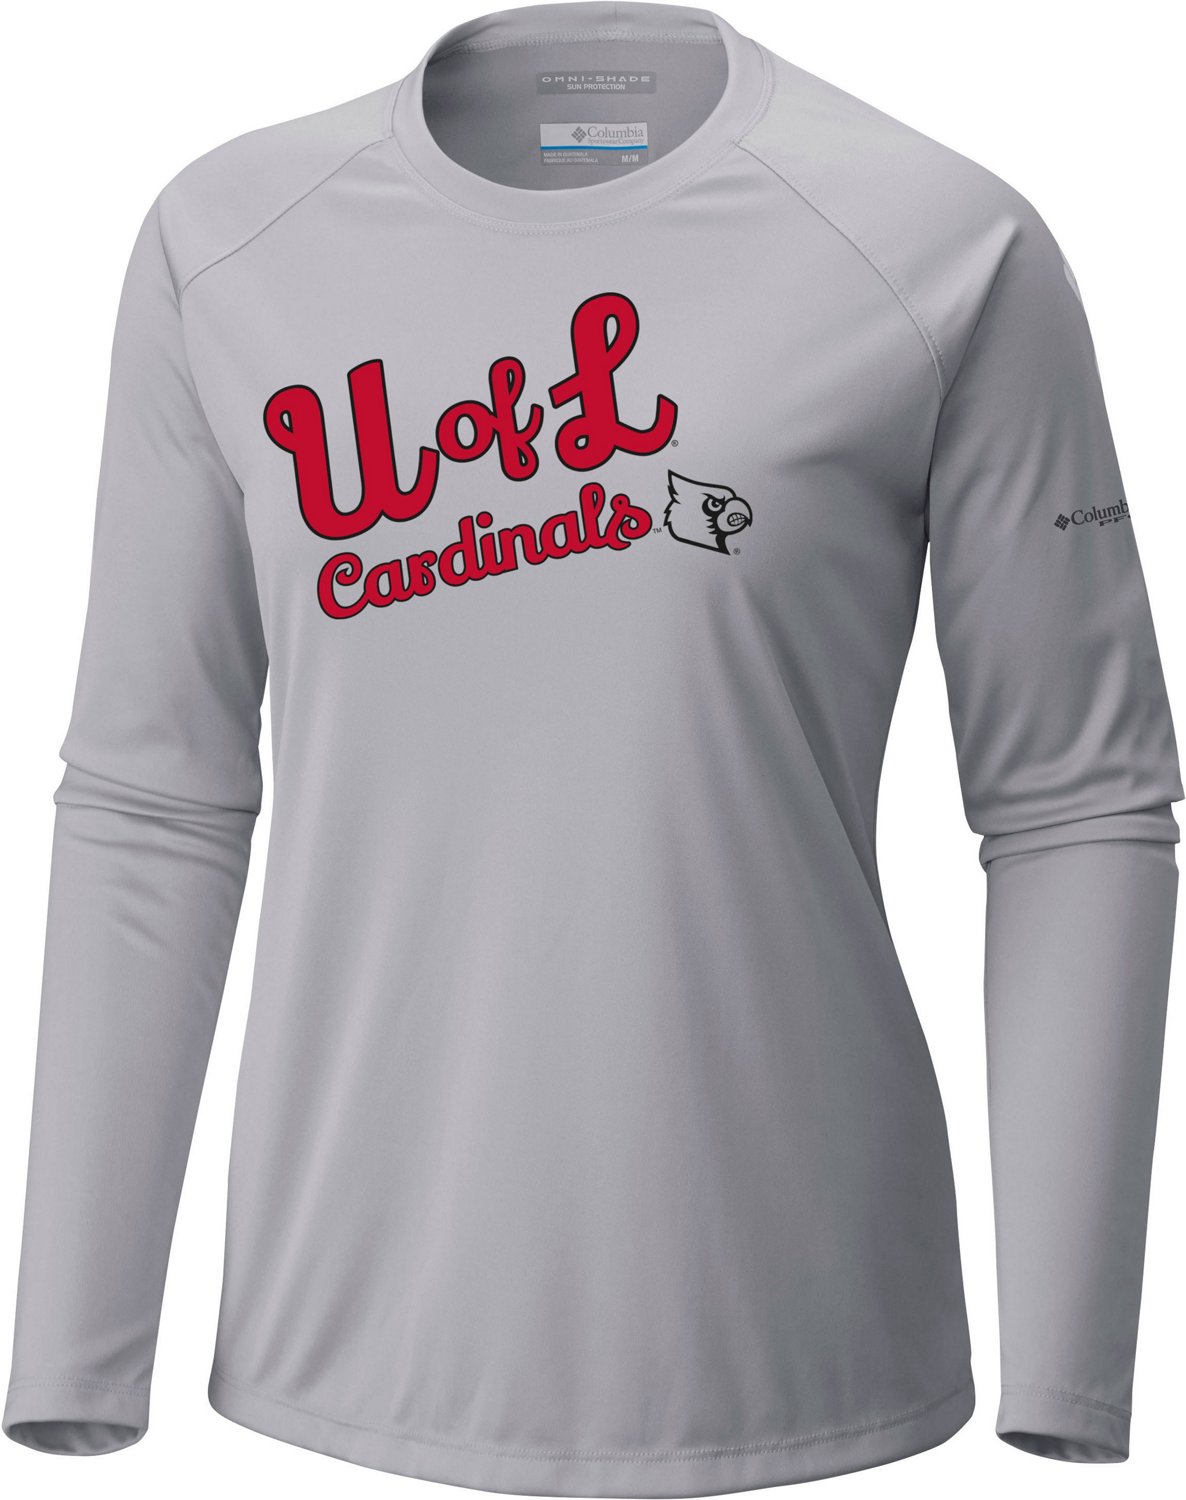 University of Louisville Long Sleeved T-Shirts, Louisville